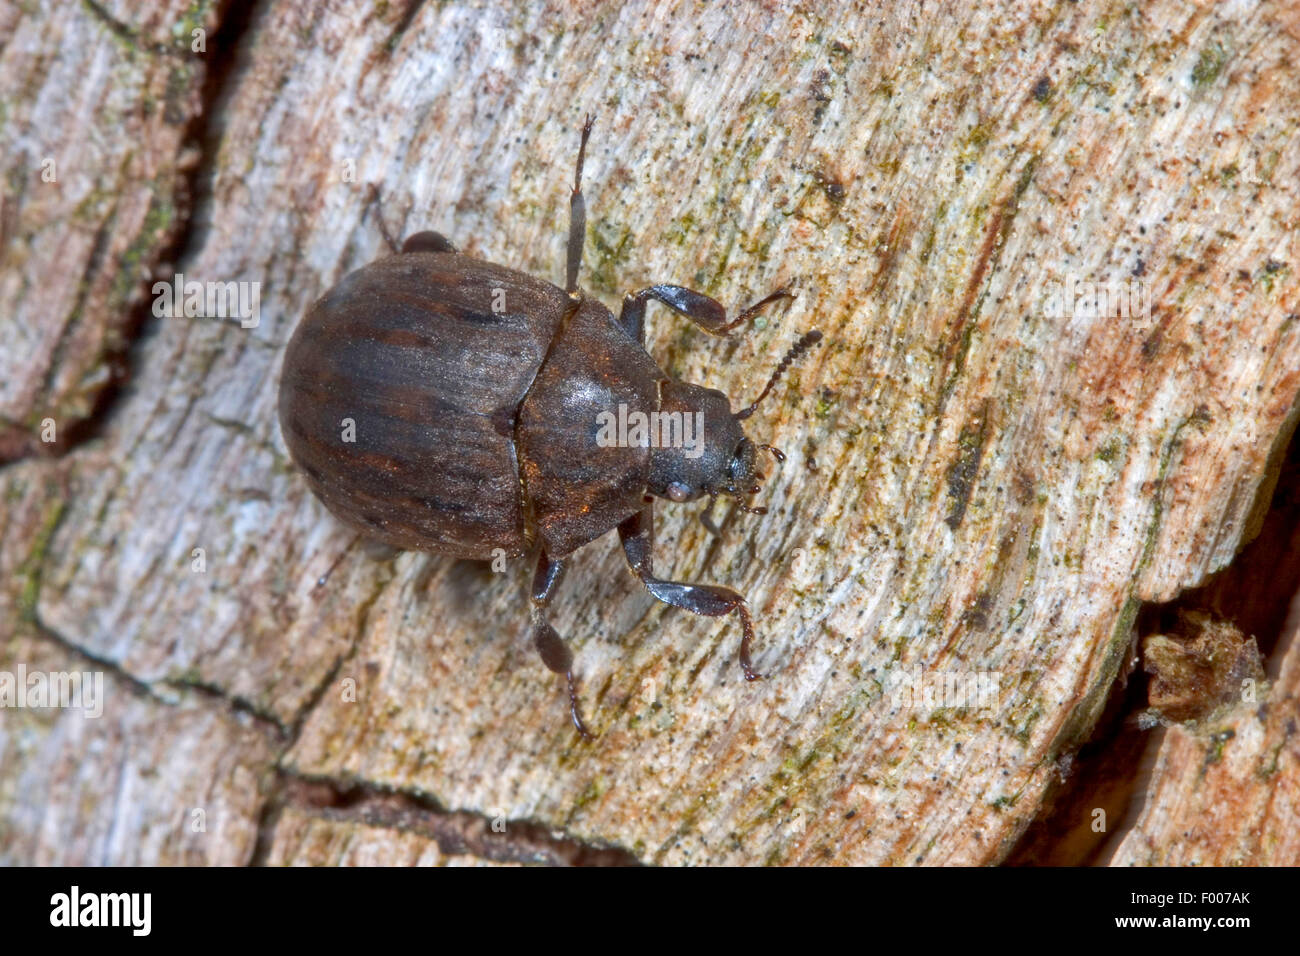 Pill beetle (Byrrhus pilula), sitting on wood, Germany Stock Photo